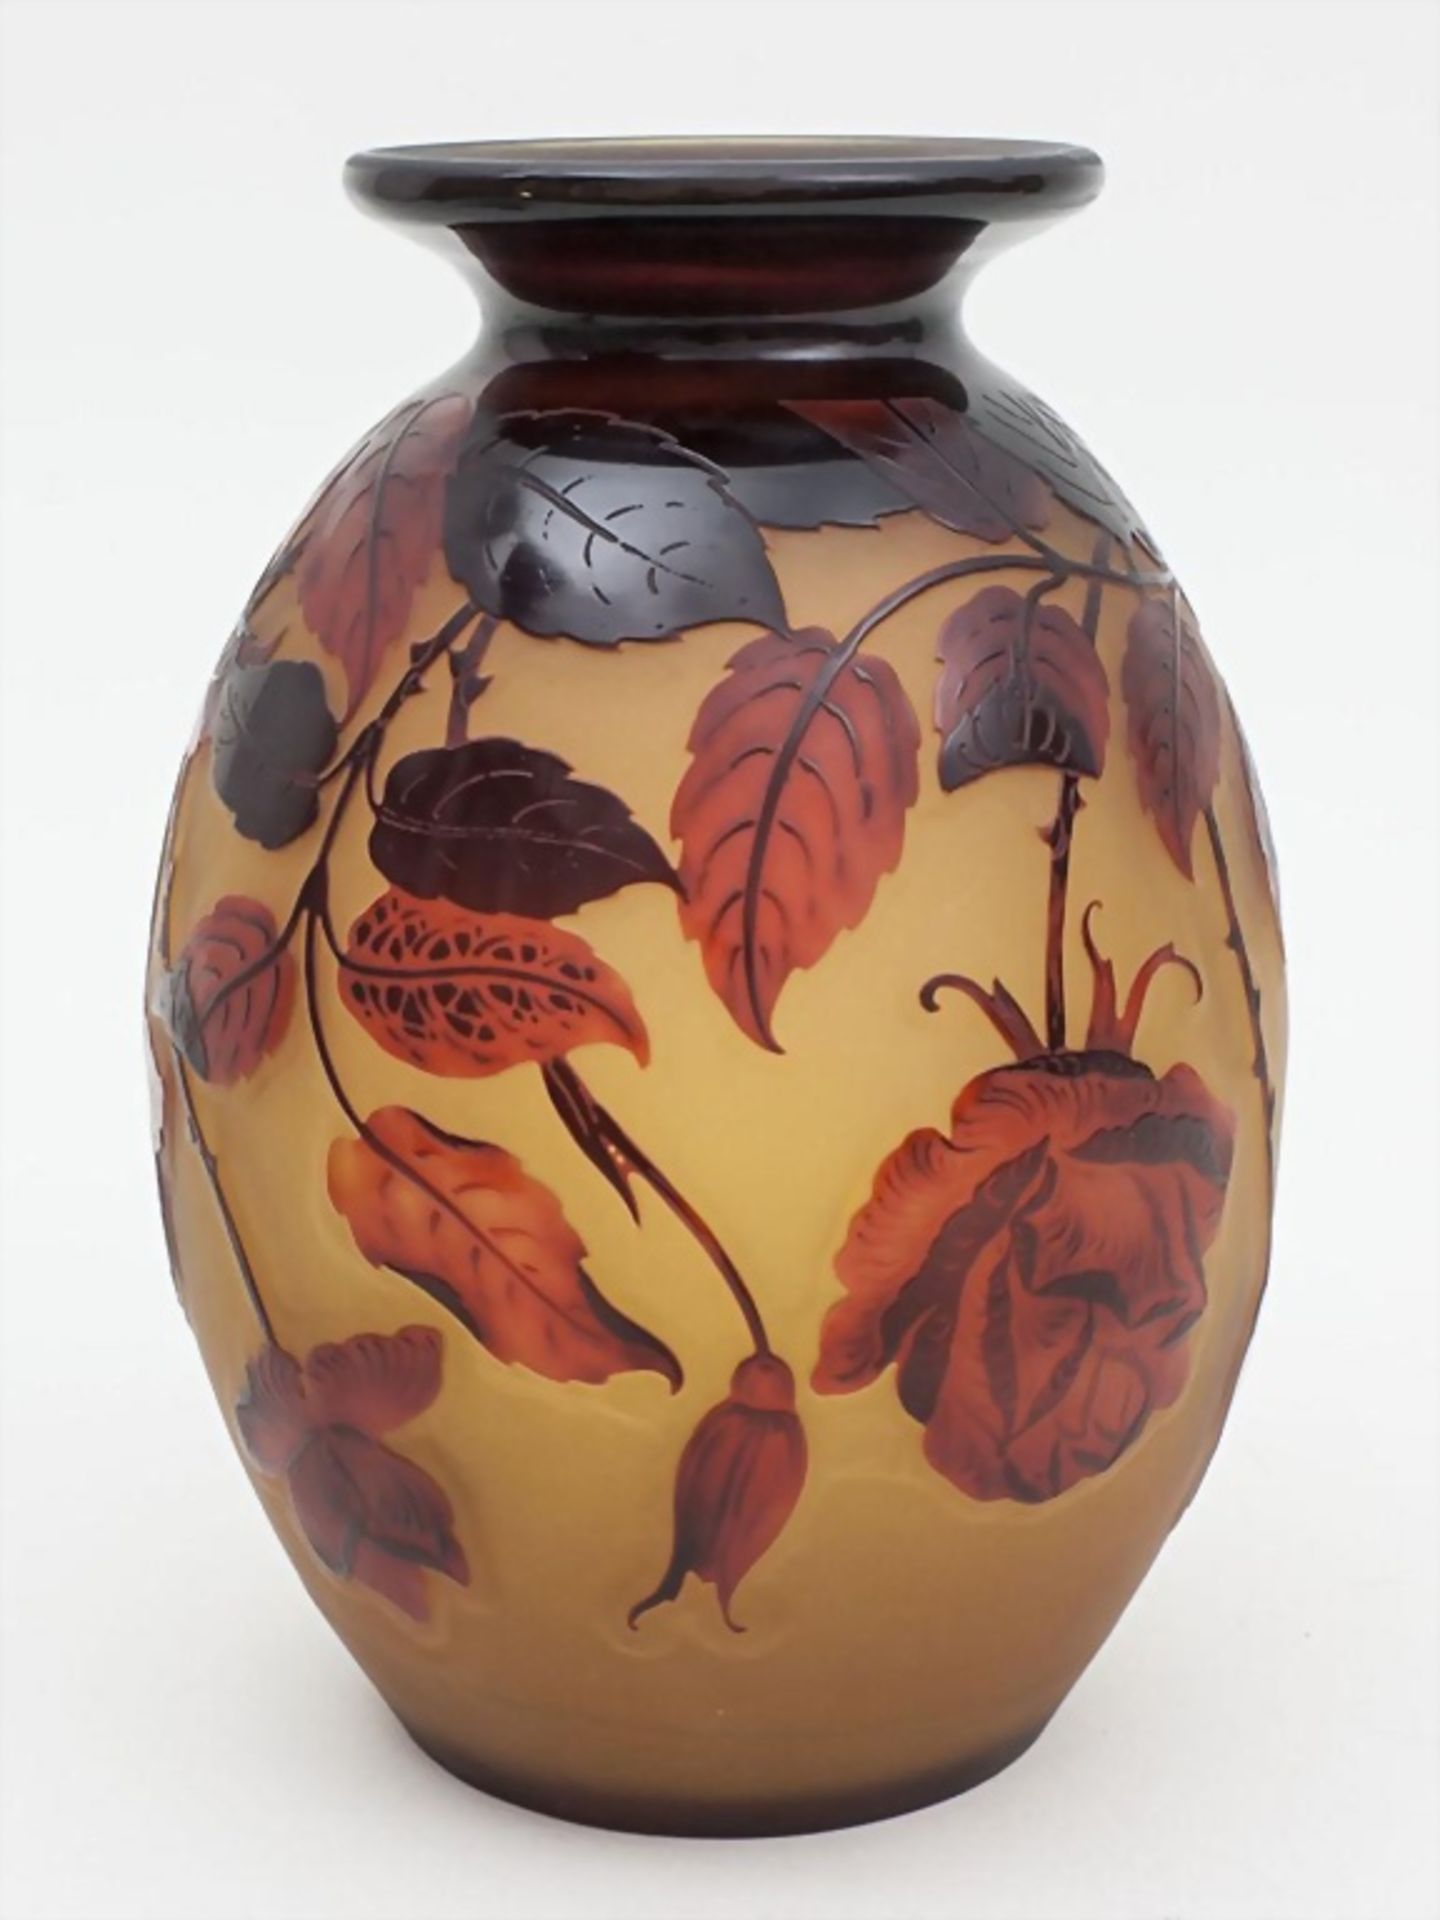 Jugendstil-Vase/Art Nouveau Vase, wohl D'Argental, Ecole de Nancy, um 1920 - Bild 2 aus 3